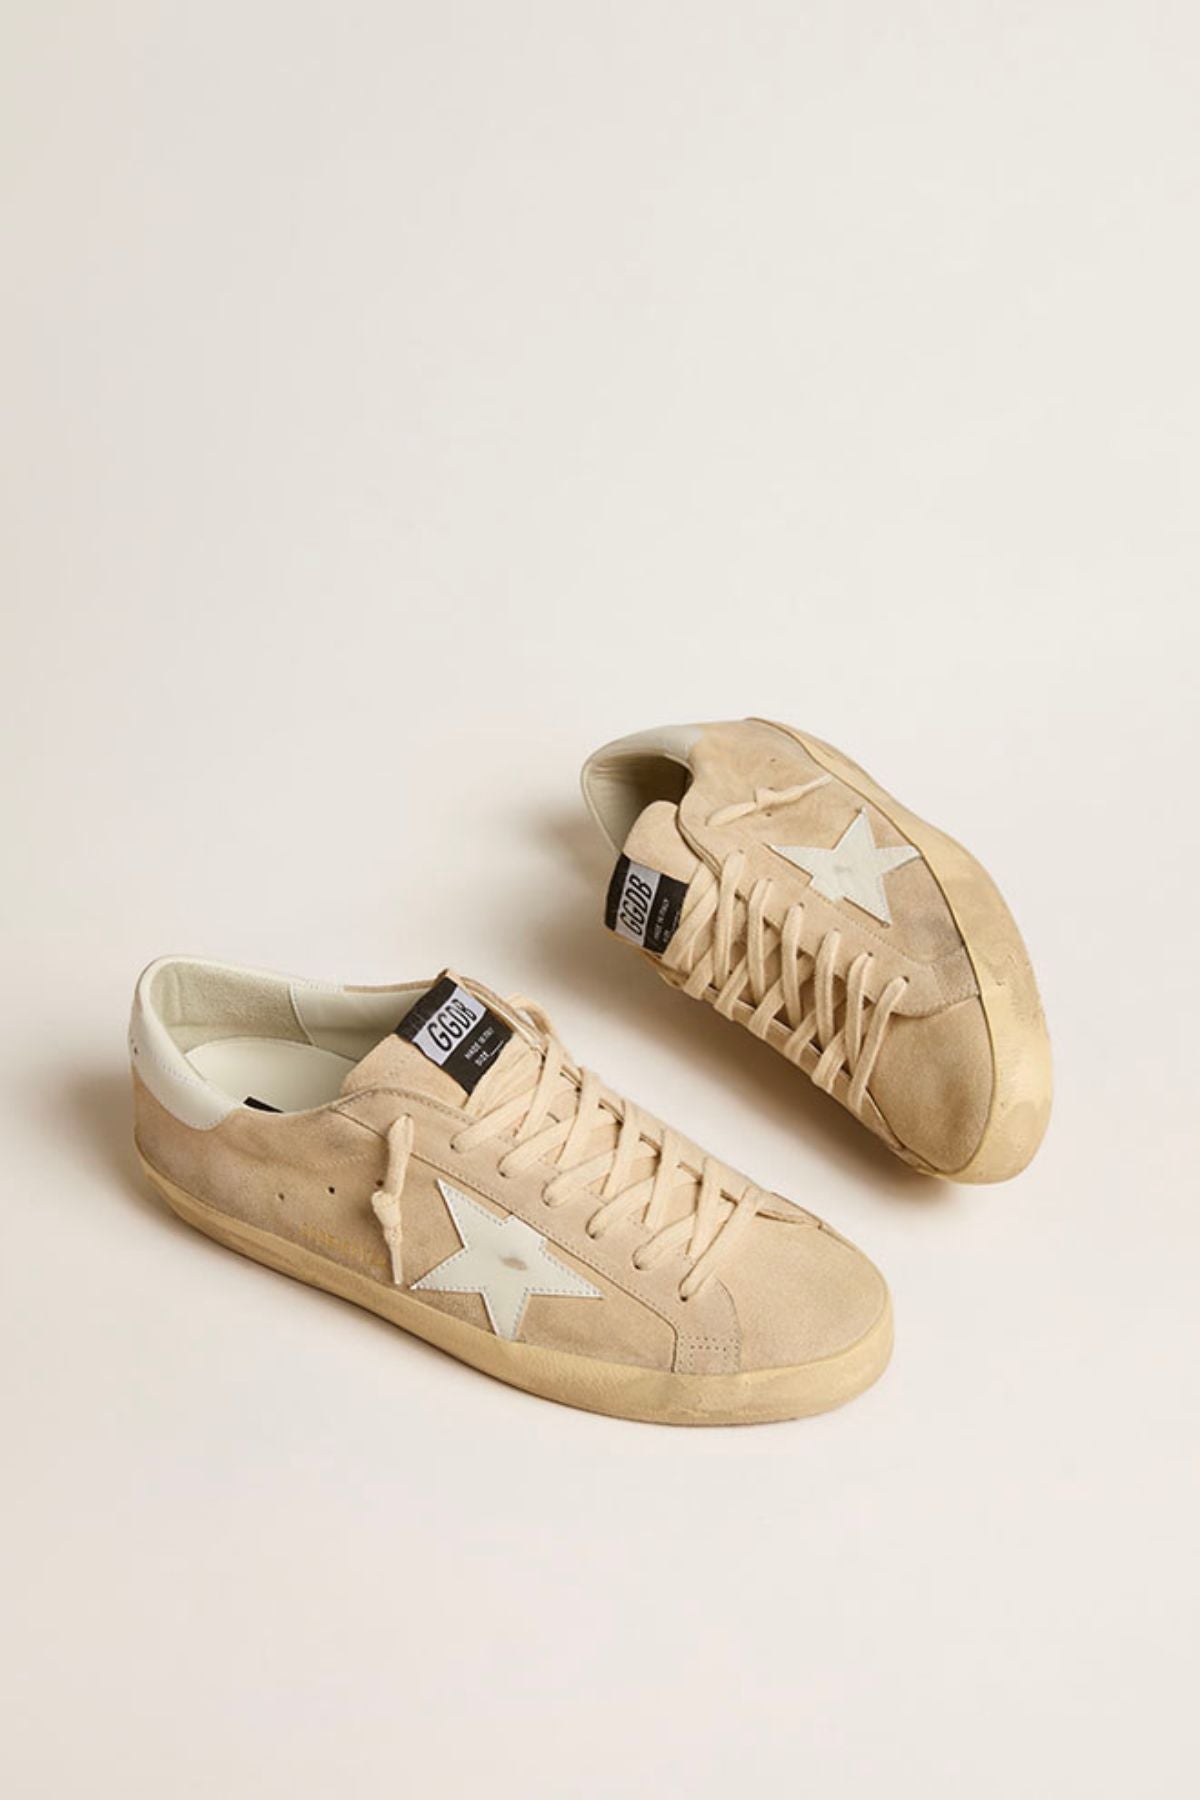 Golden Goose Superstar Sneaker - Seed Pearl/ White